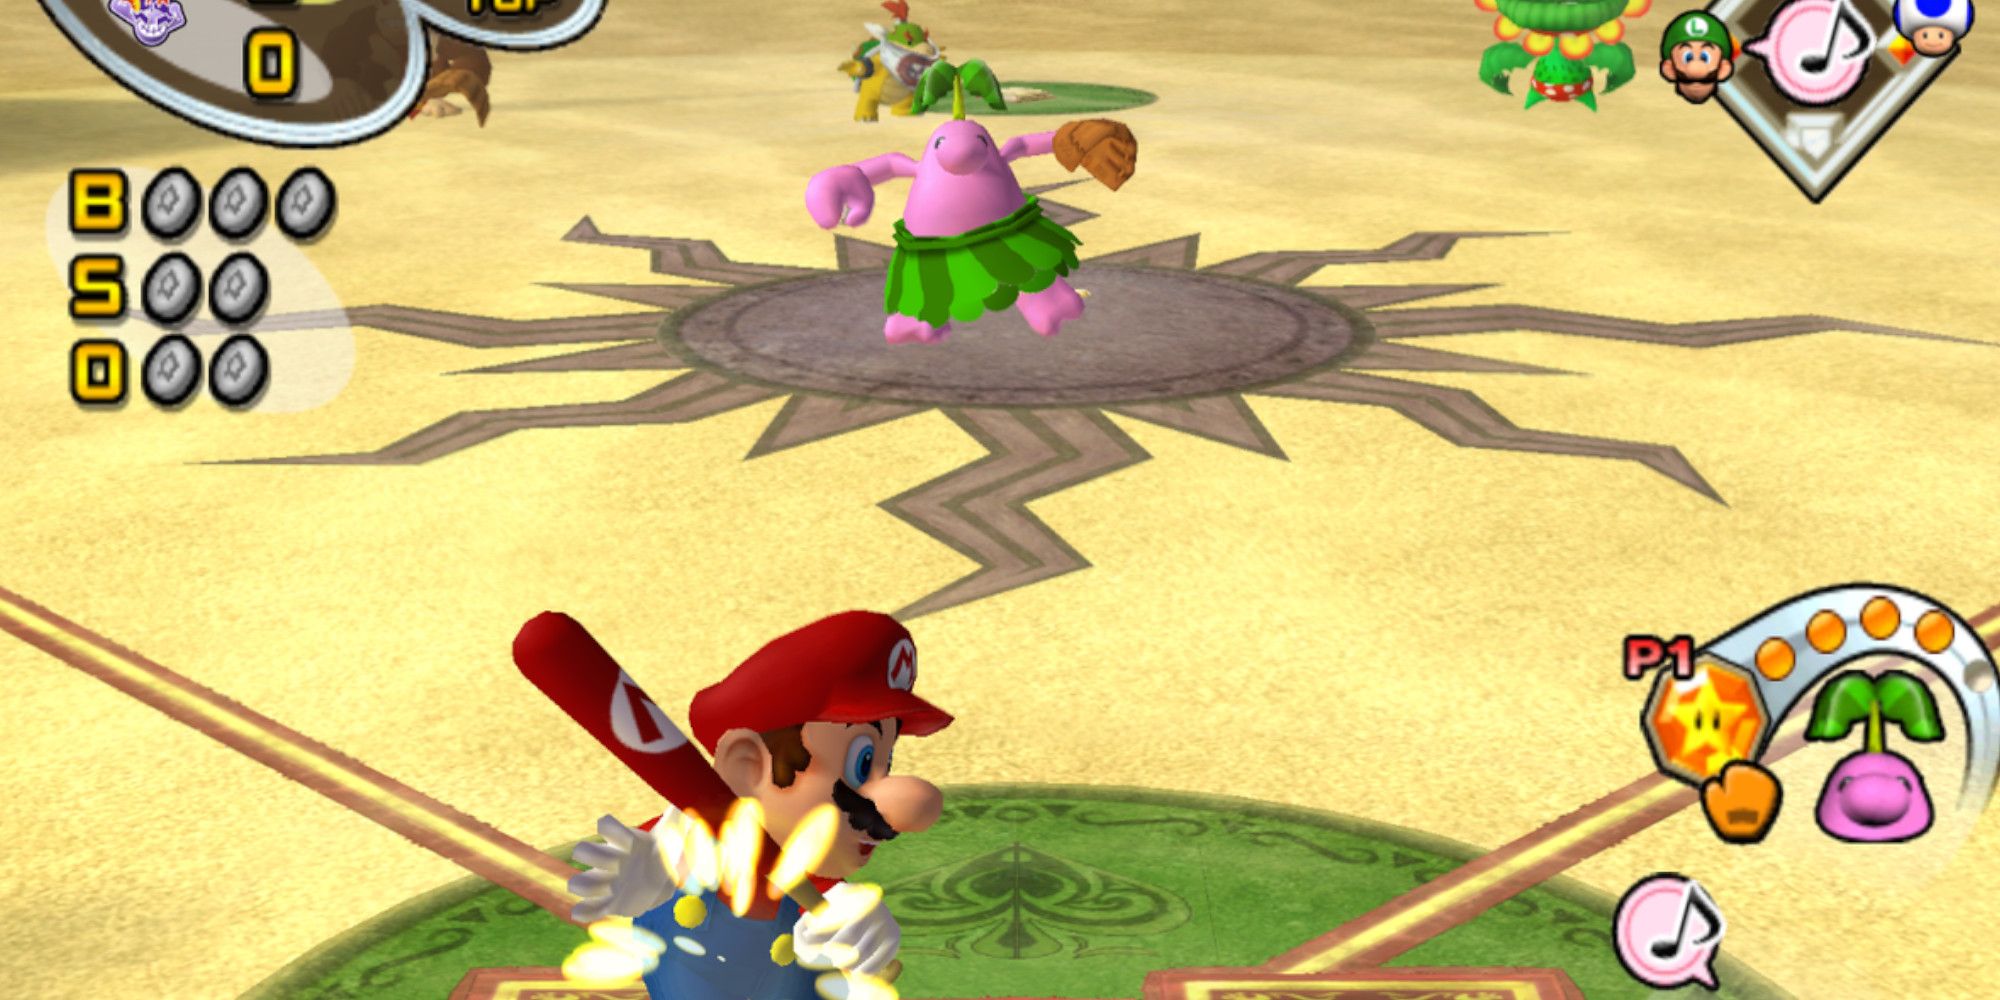 Mario Stepping Up To Bat against a Pianta in Mario Superstar Baseball